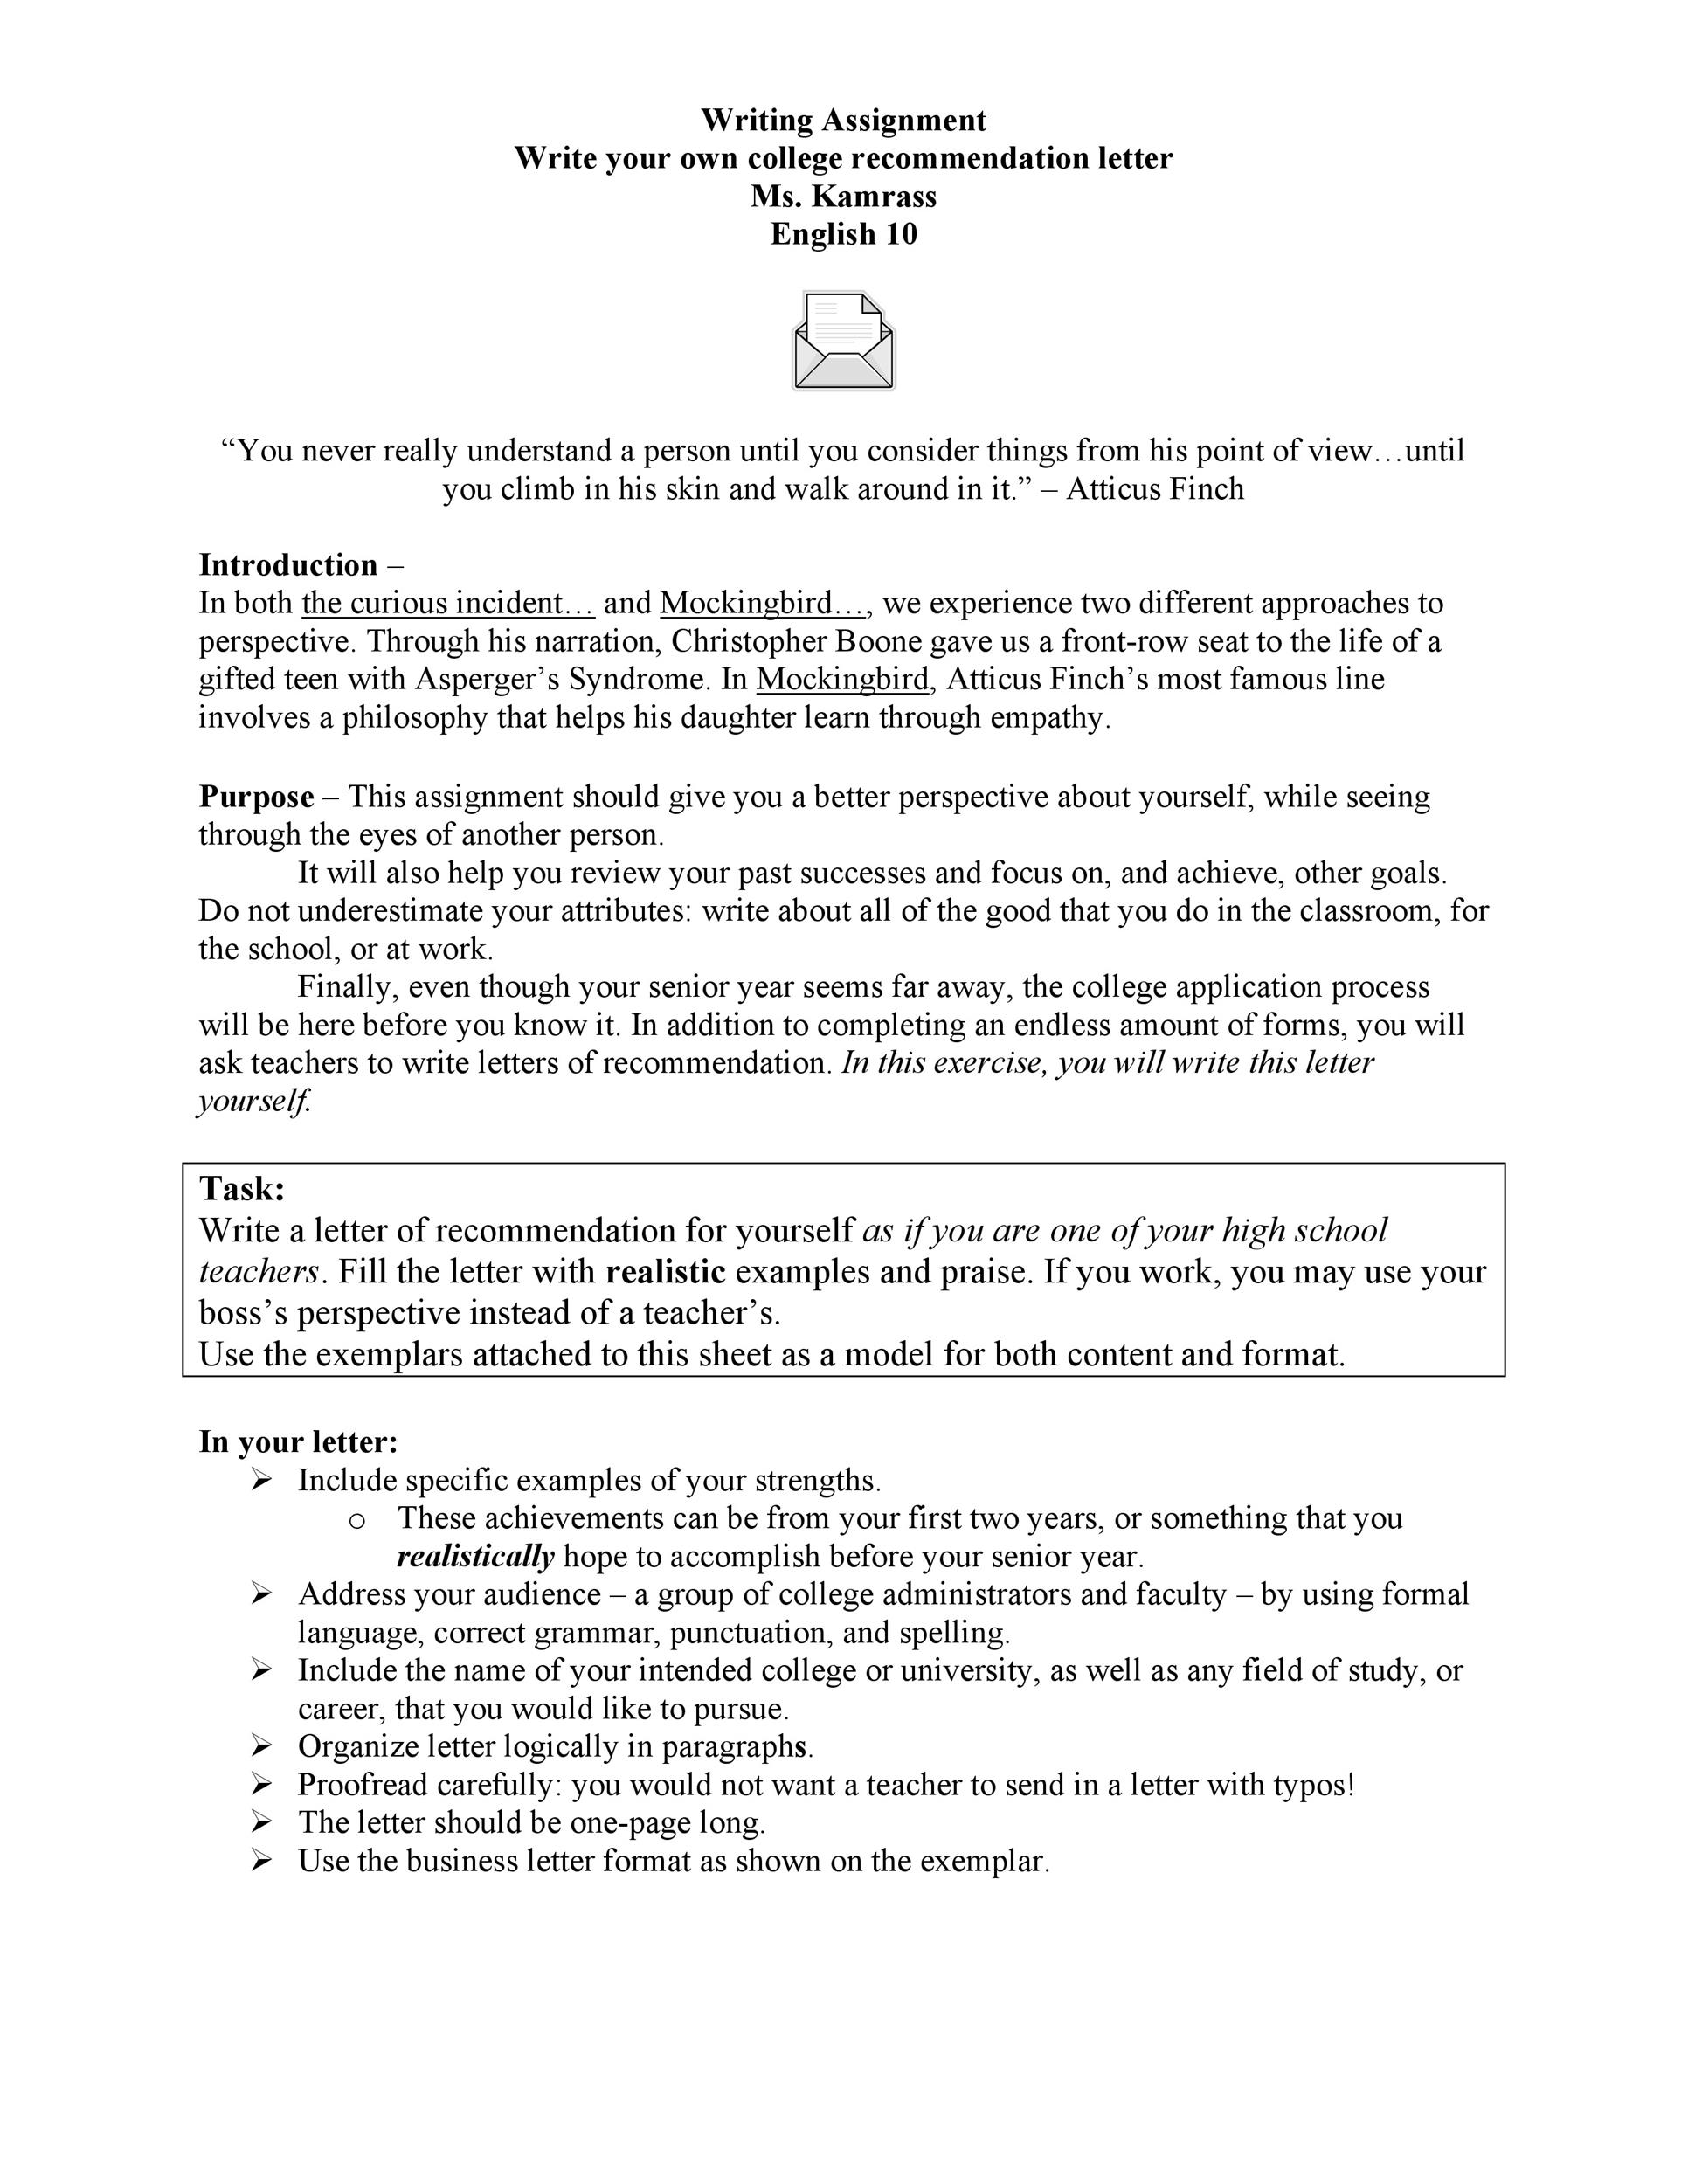 Teacher recommendation letter help